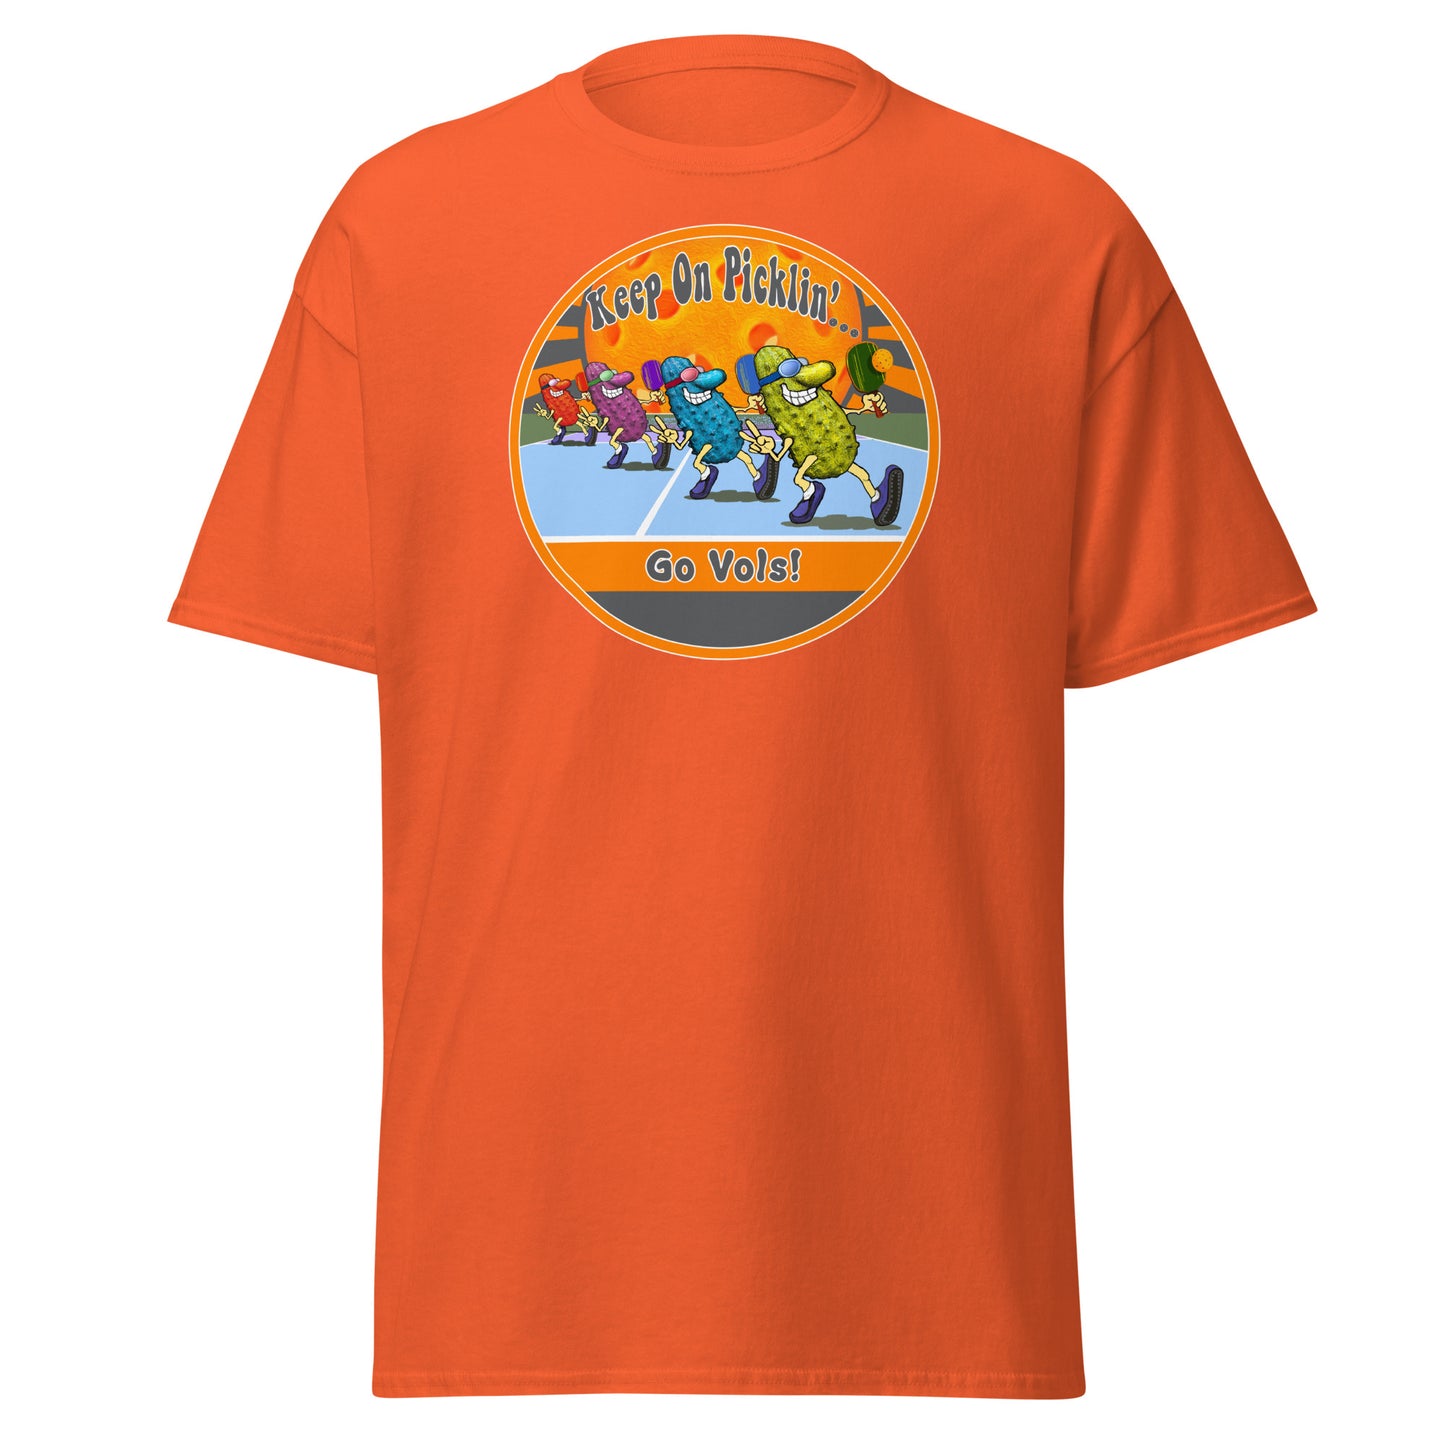 Tennessee Volunteers Pickleball Shirt, Short-sleeve Tee, Pickleball Sun Graphic